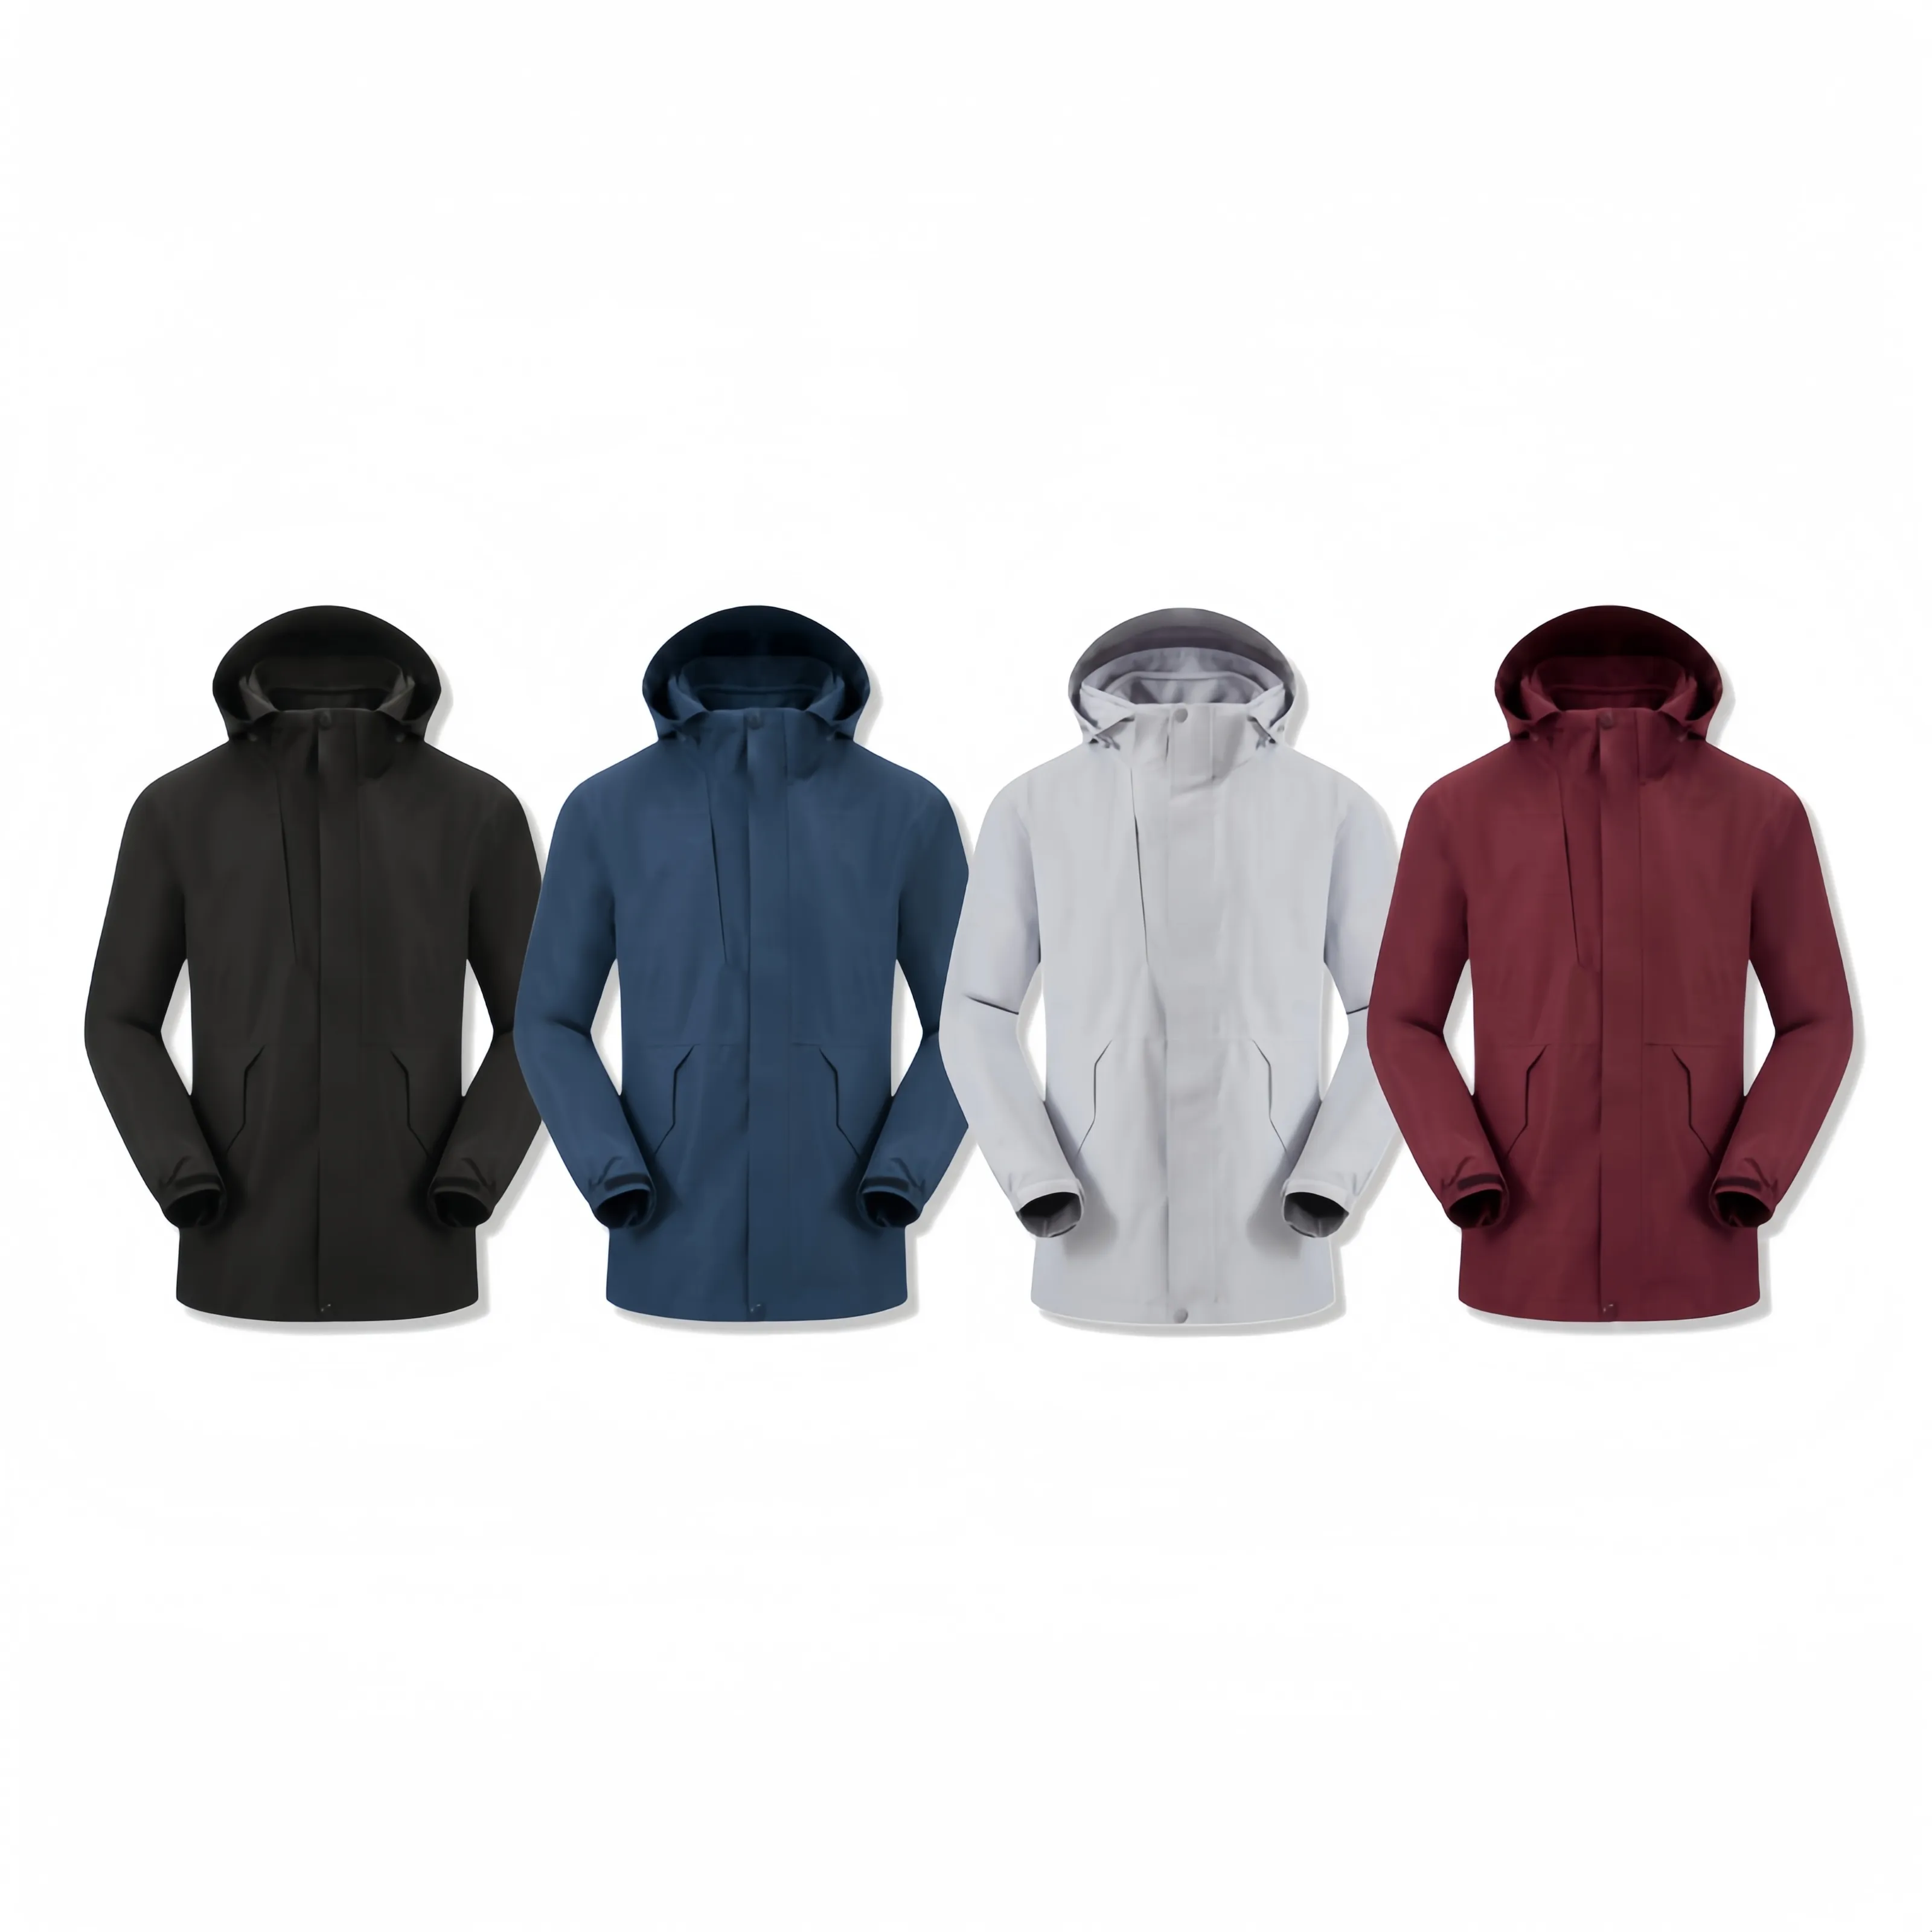 Waterproof 10000 Permeability 8000 best quality clothing hiking outdoor waterproof hardshell jacket outdoor heated jacket